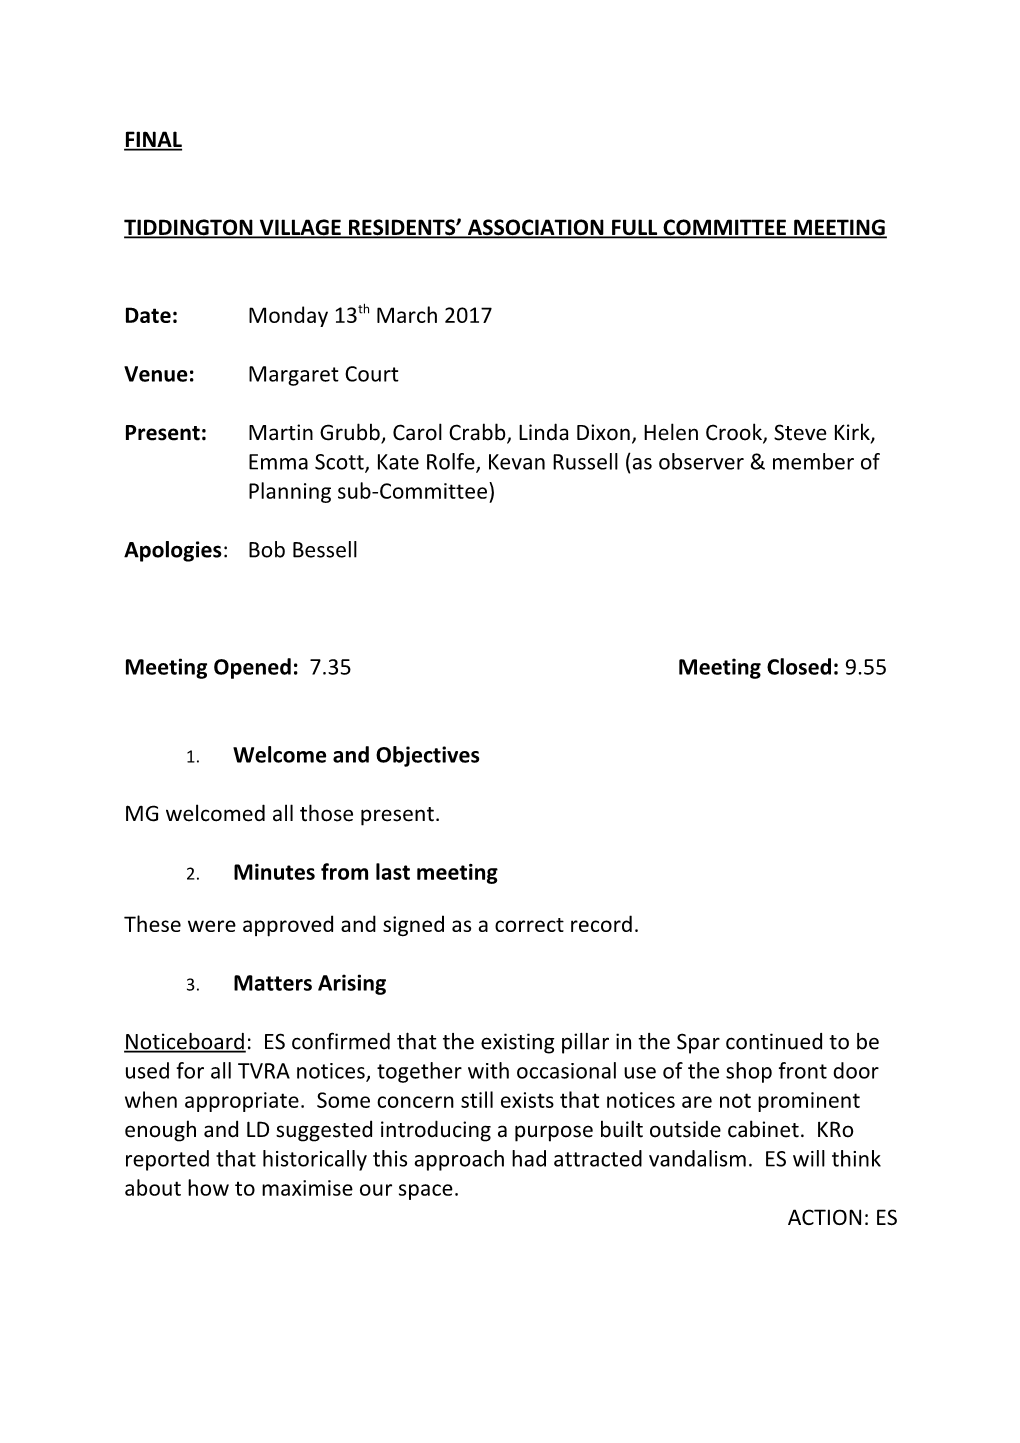 Tiddington Village Residents Association Full Committee Meeting